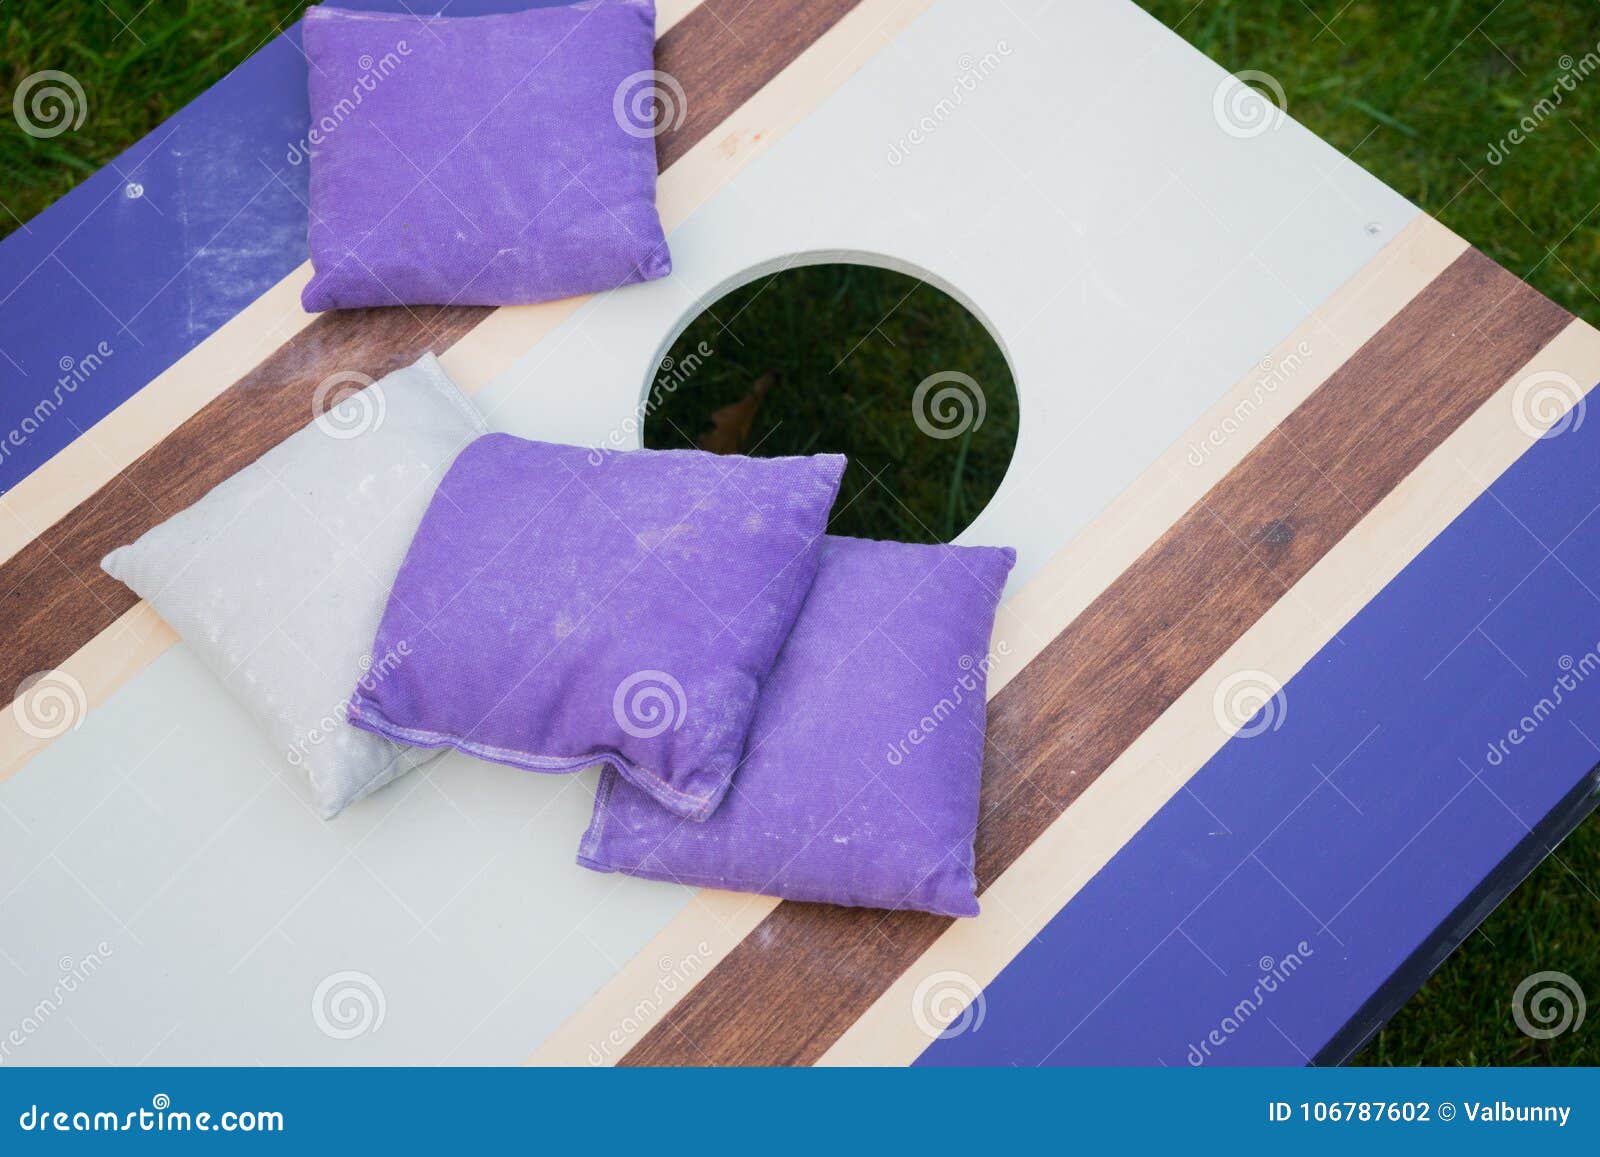 purple cornhole bean bag toss game